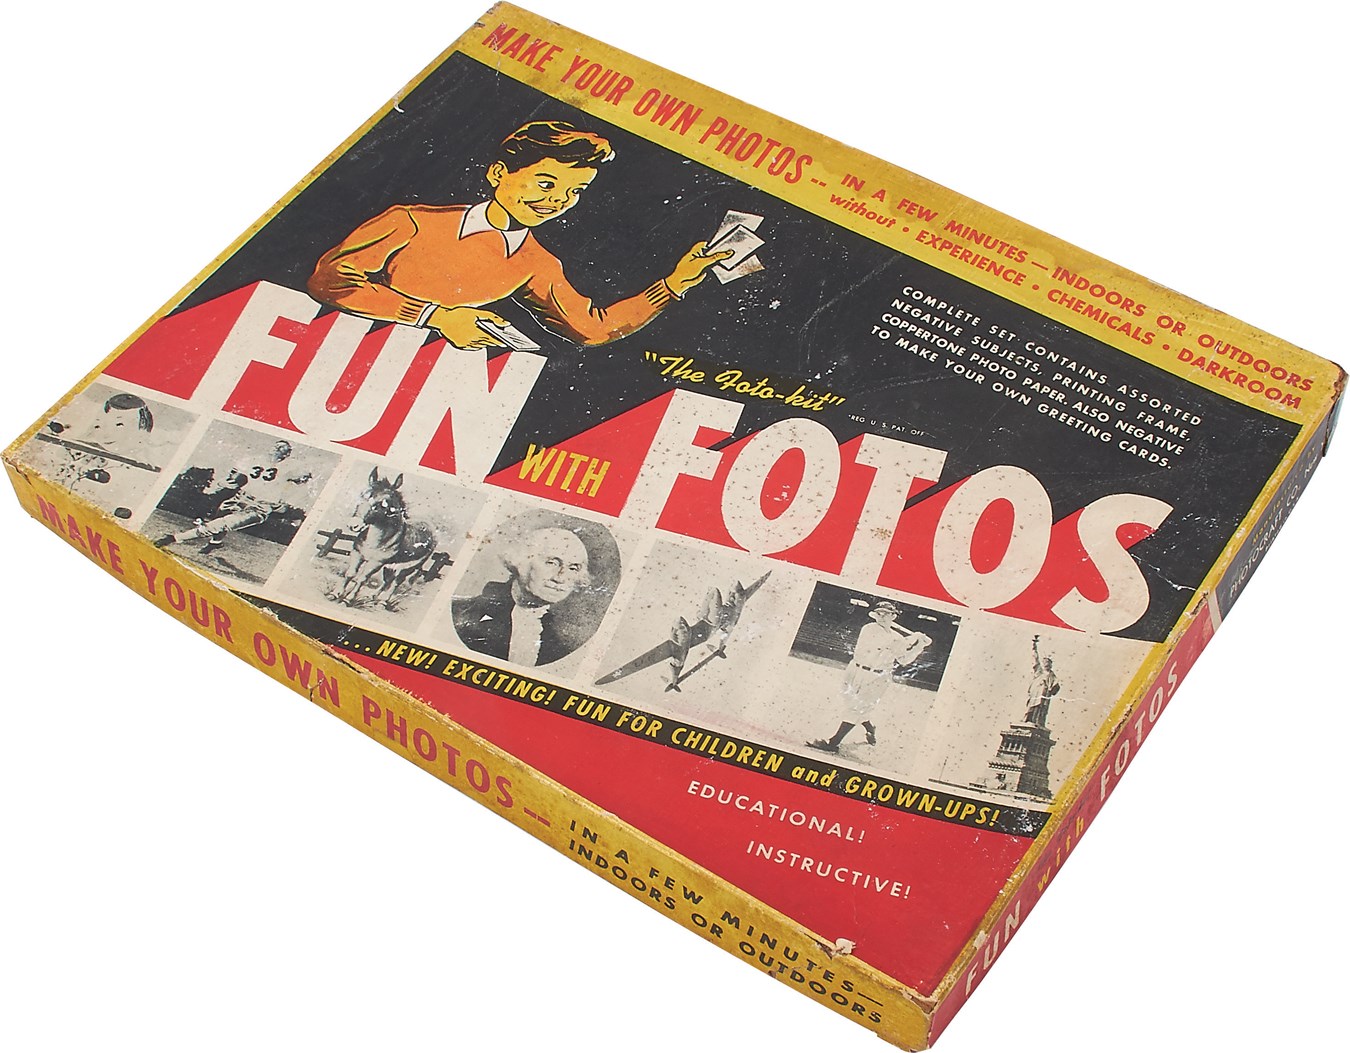 - 1940s "Fun With Fotos" Game with Joe DiMaggio Card - Similar to 1948 Topps Magic Photos